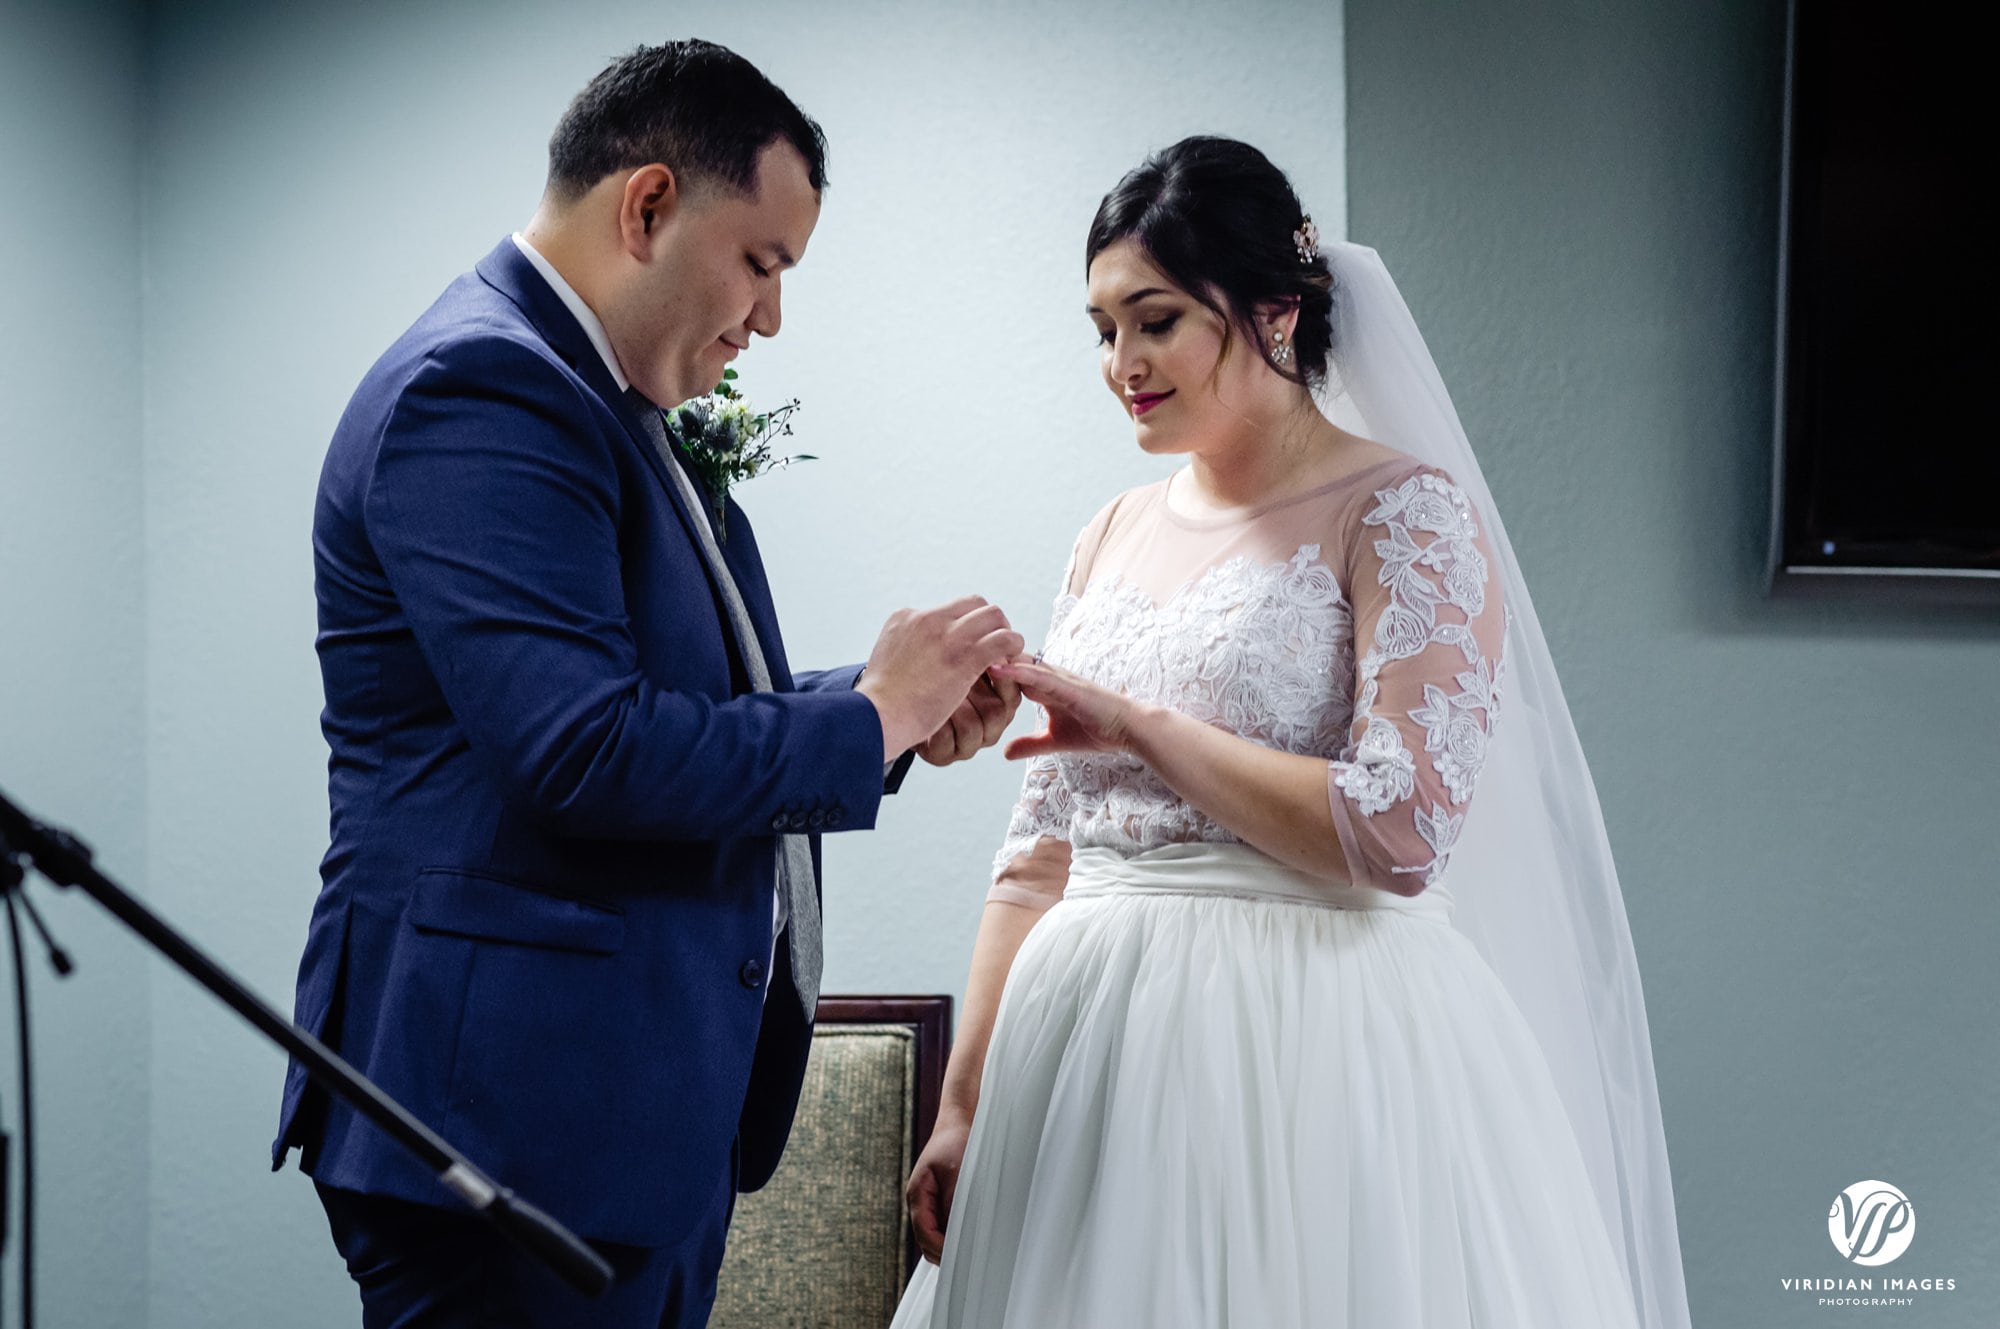 Kingdom Hall wedding ring exchange